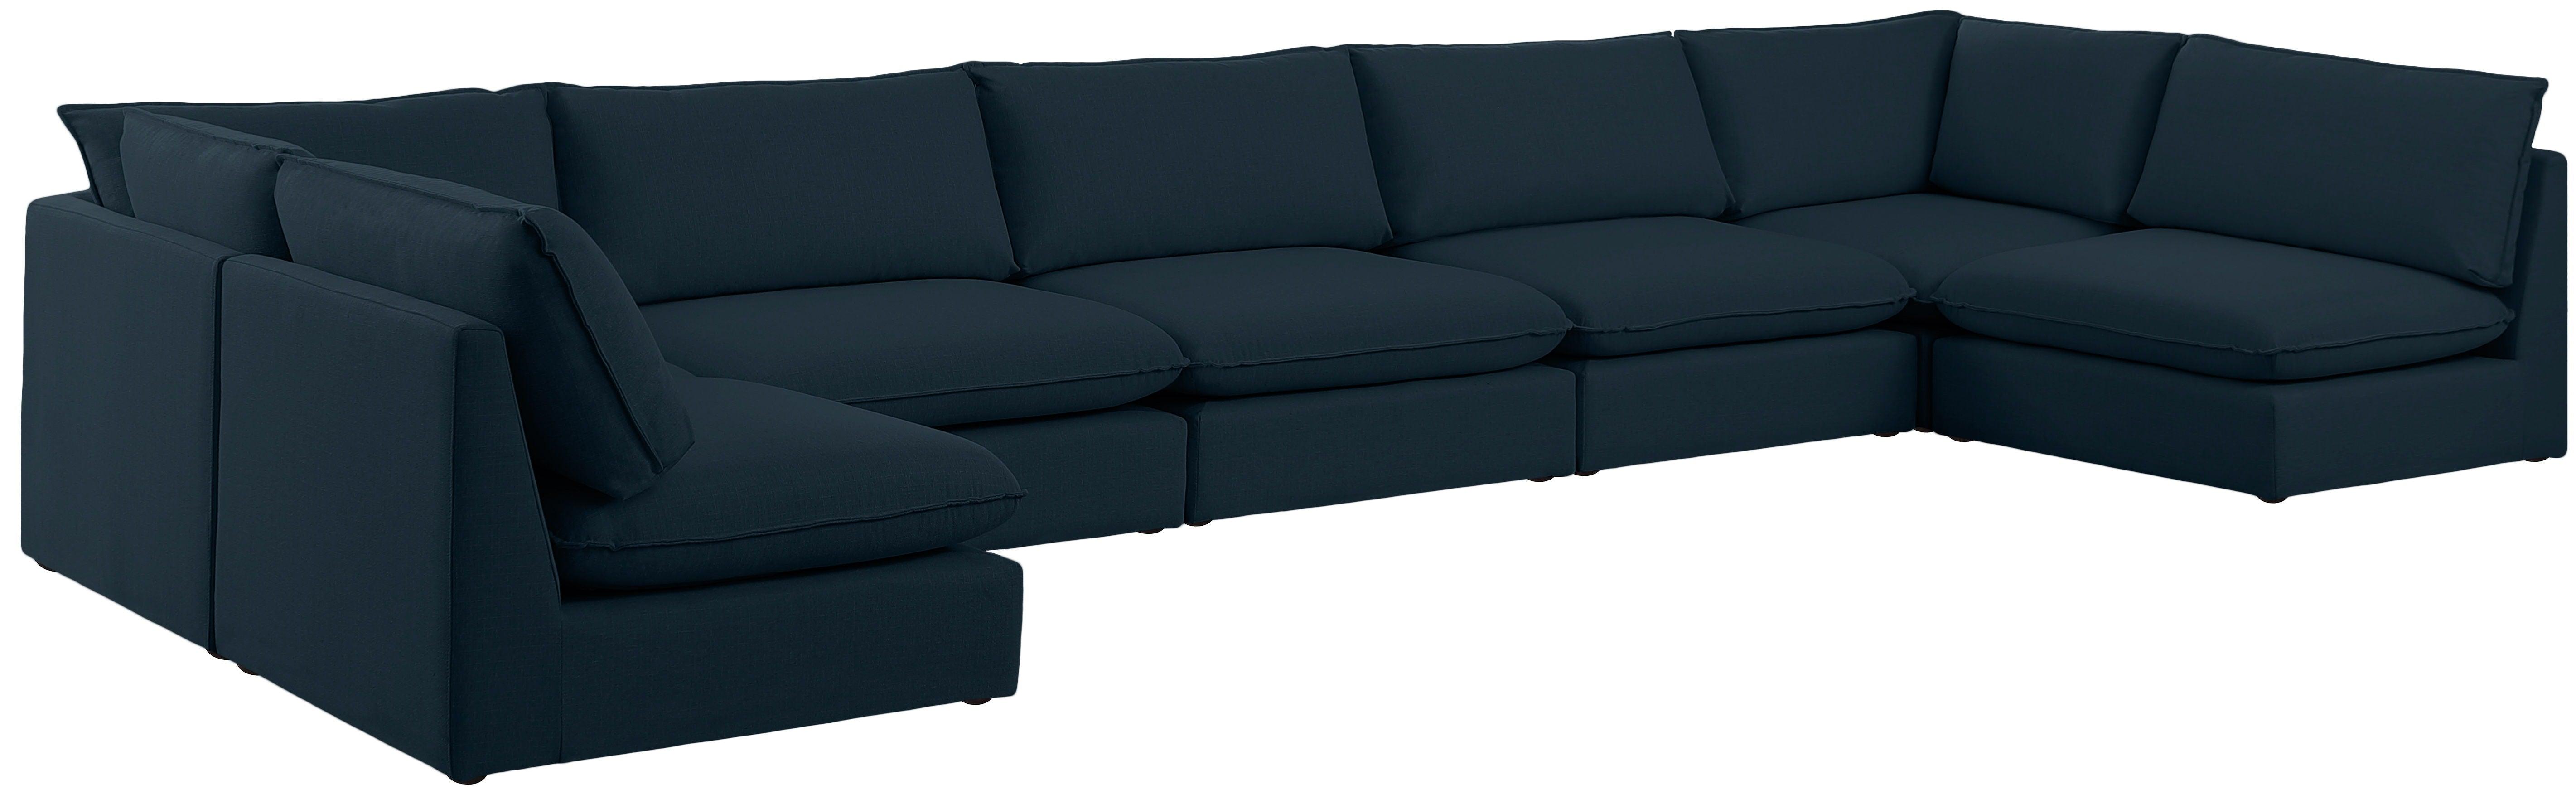 Meridian Furniture - Mackenzie - Modular Sectional 7 Piece - Navy - Fabric - 5th Avenue Furniture